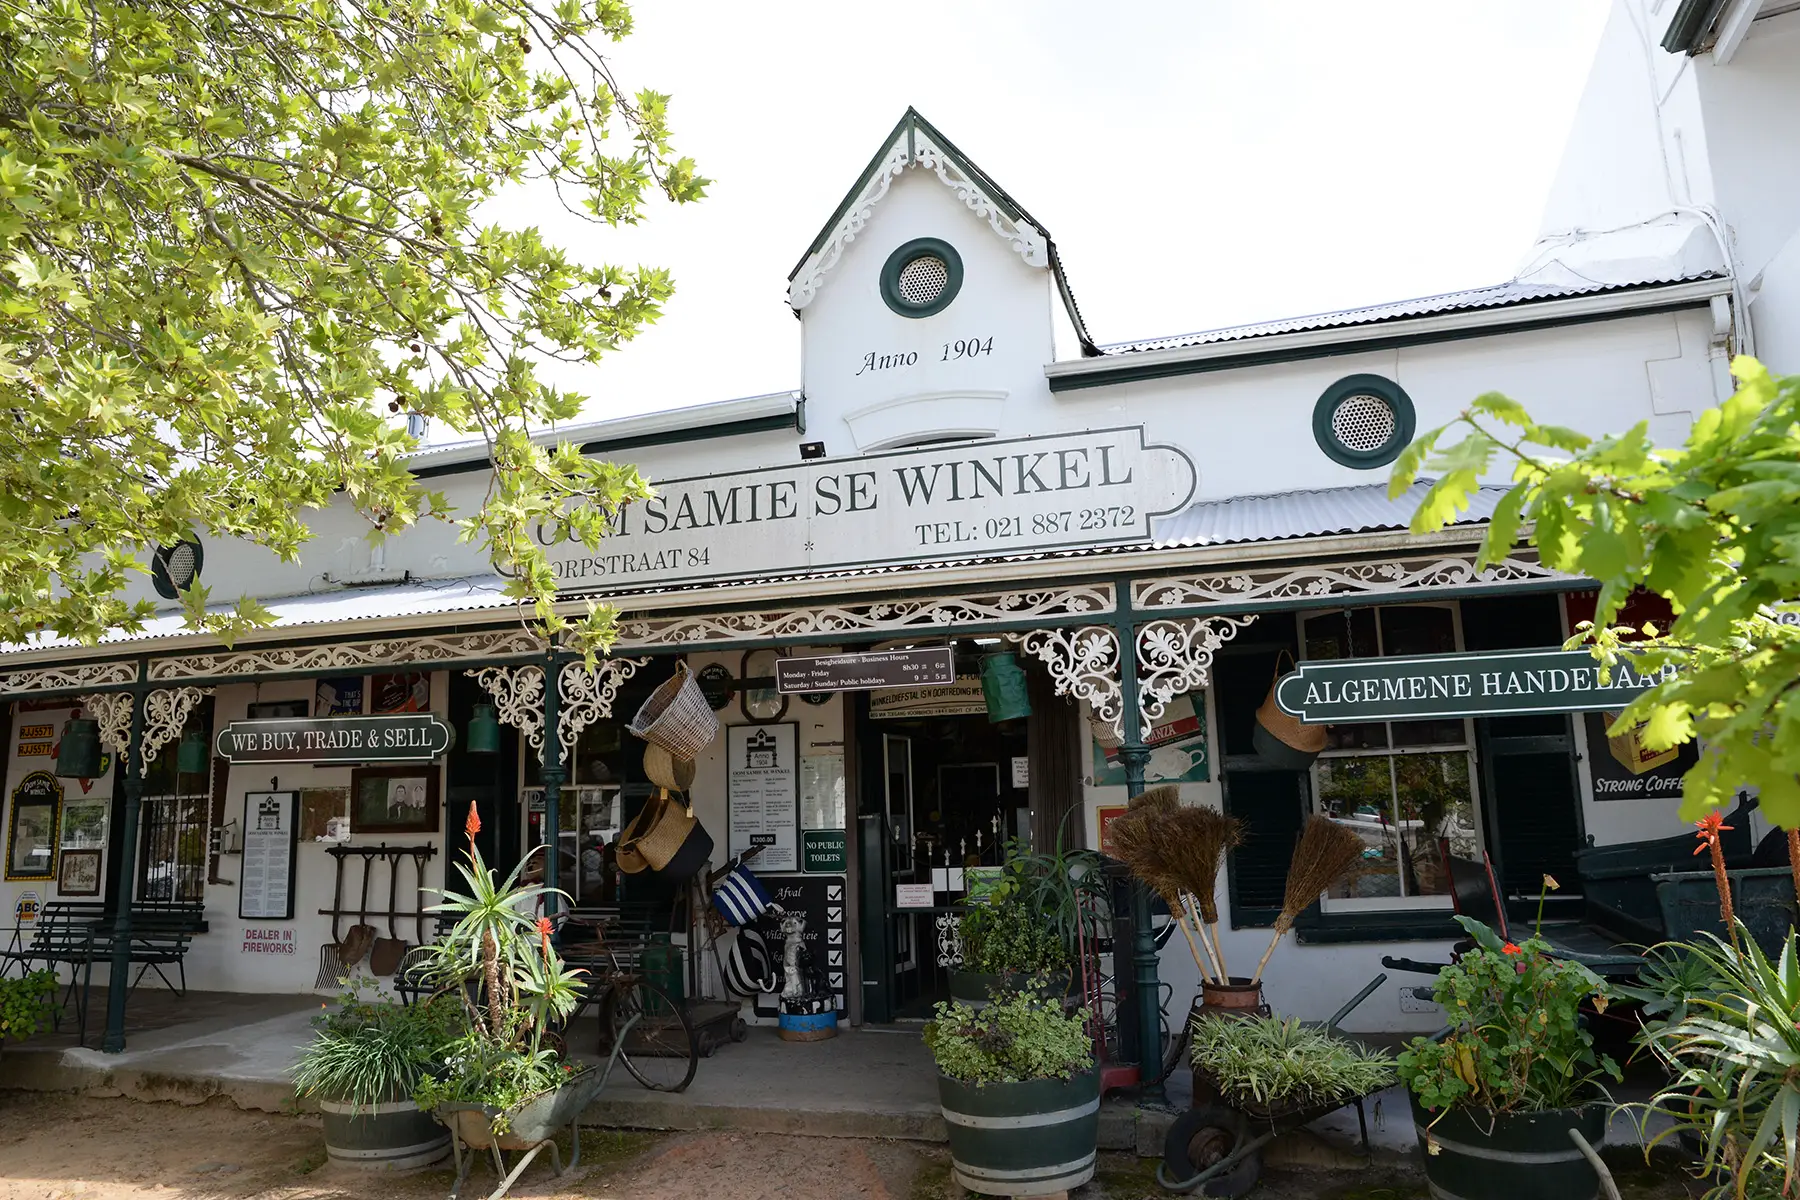 A well-known curiosity shop in Stellenbosch, South Africa, called 'Oom Samie se winkel' all written in Afrikaans